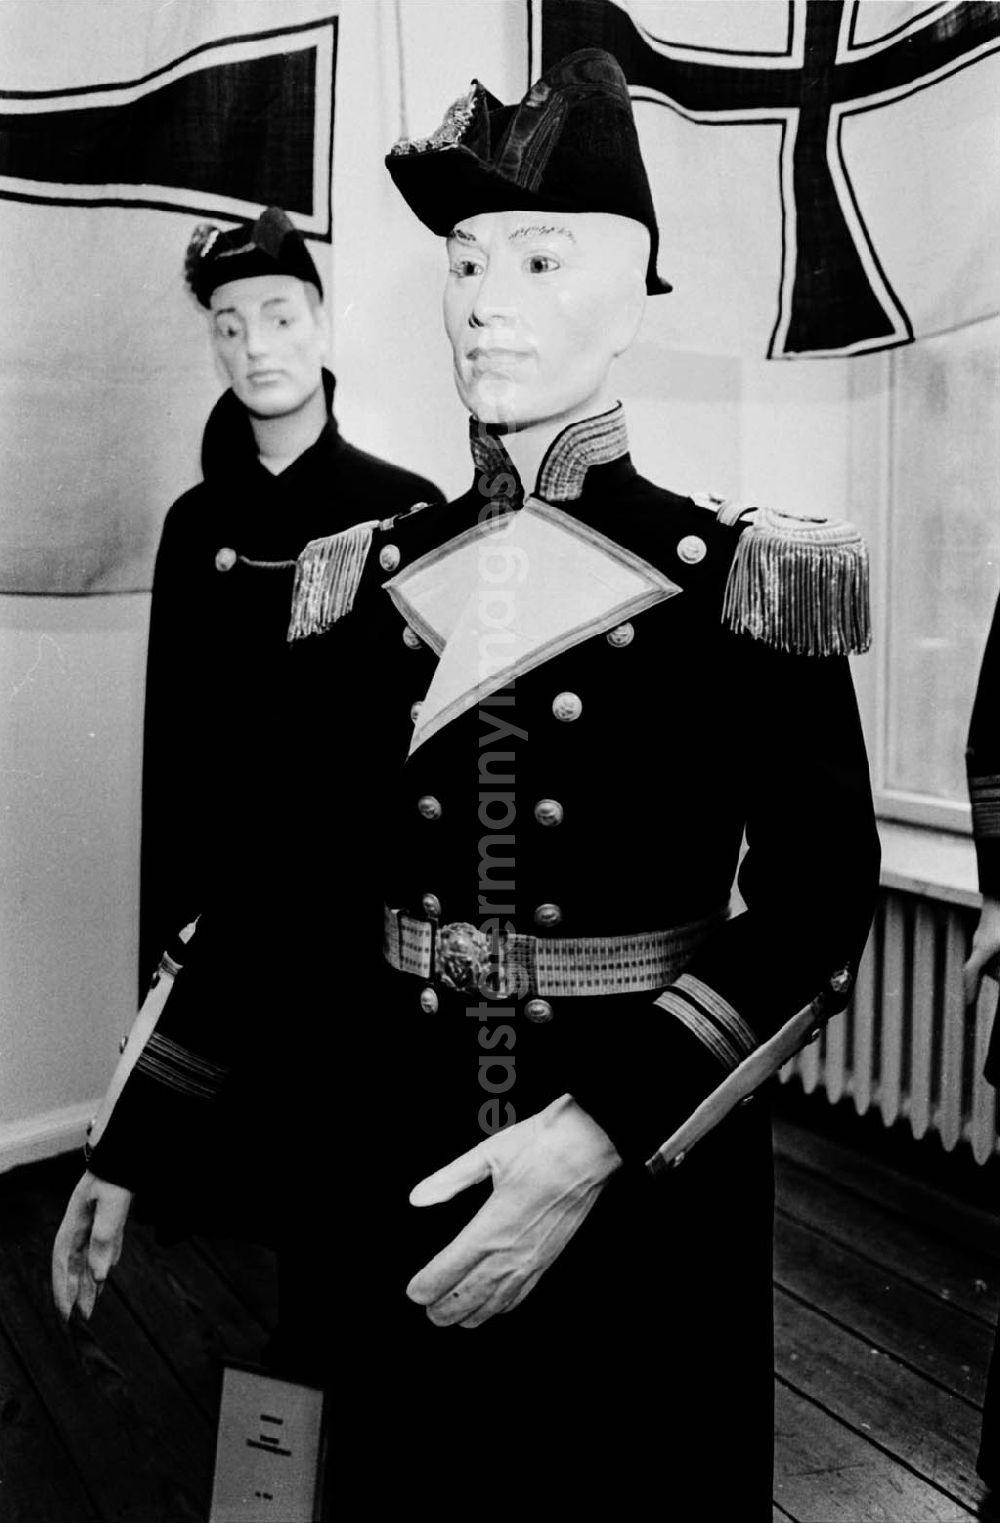 GDR photo archive: Rostock - Marineuniform-Ausstellung im Schiffahrtsmuseum Rostock